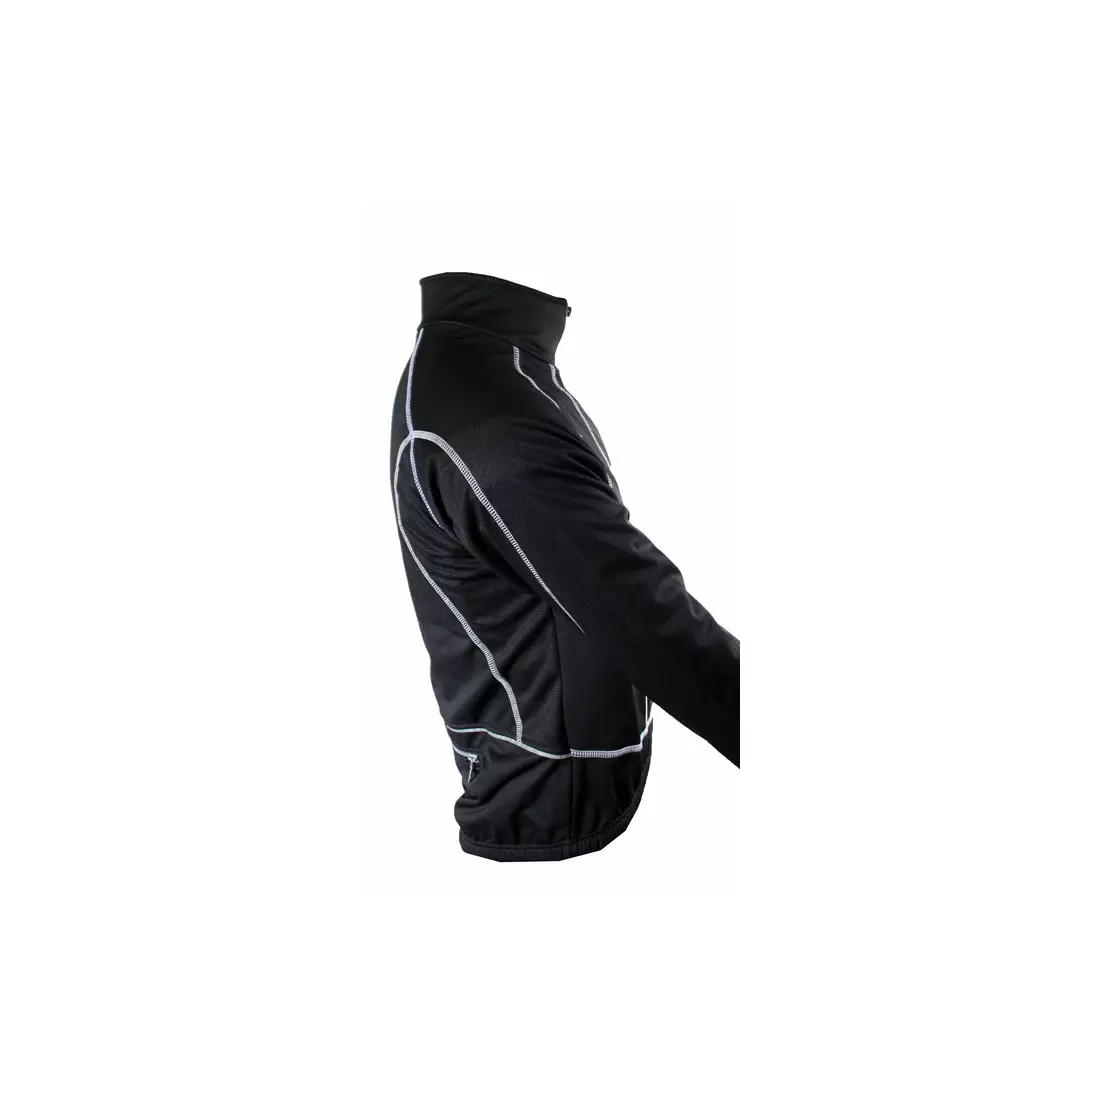 POLEDNIK - 1003 WINDBLOCK - membrane cycling jacket, color: Black